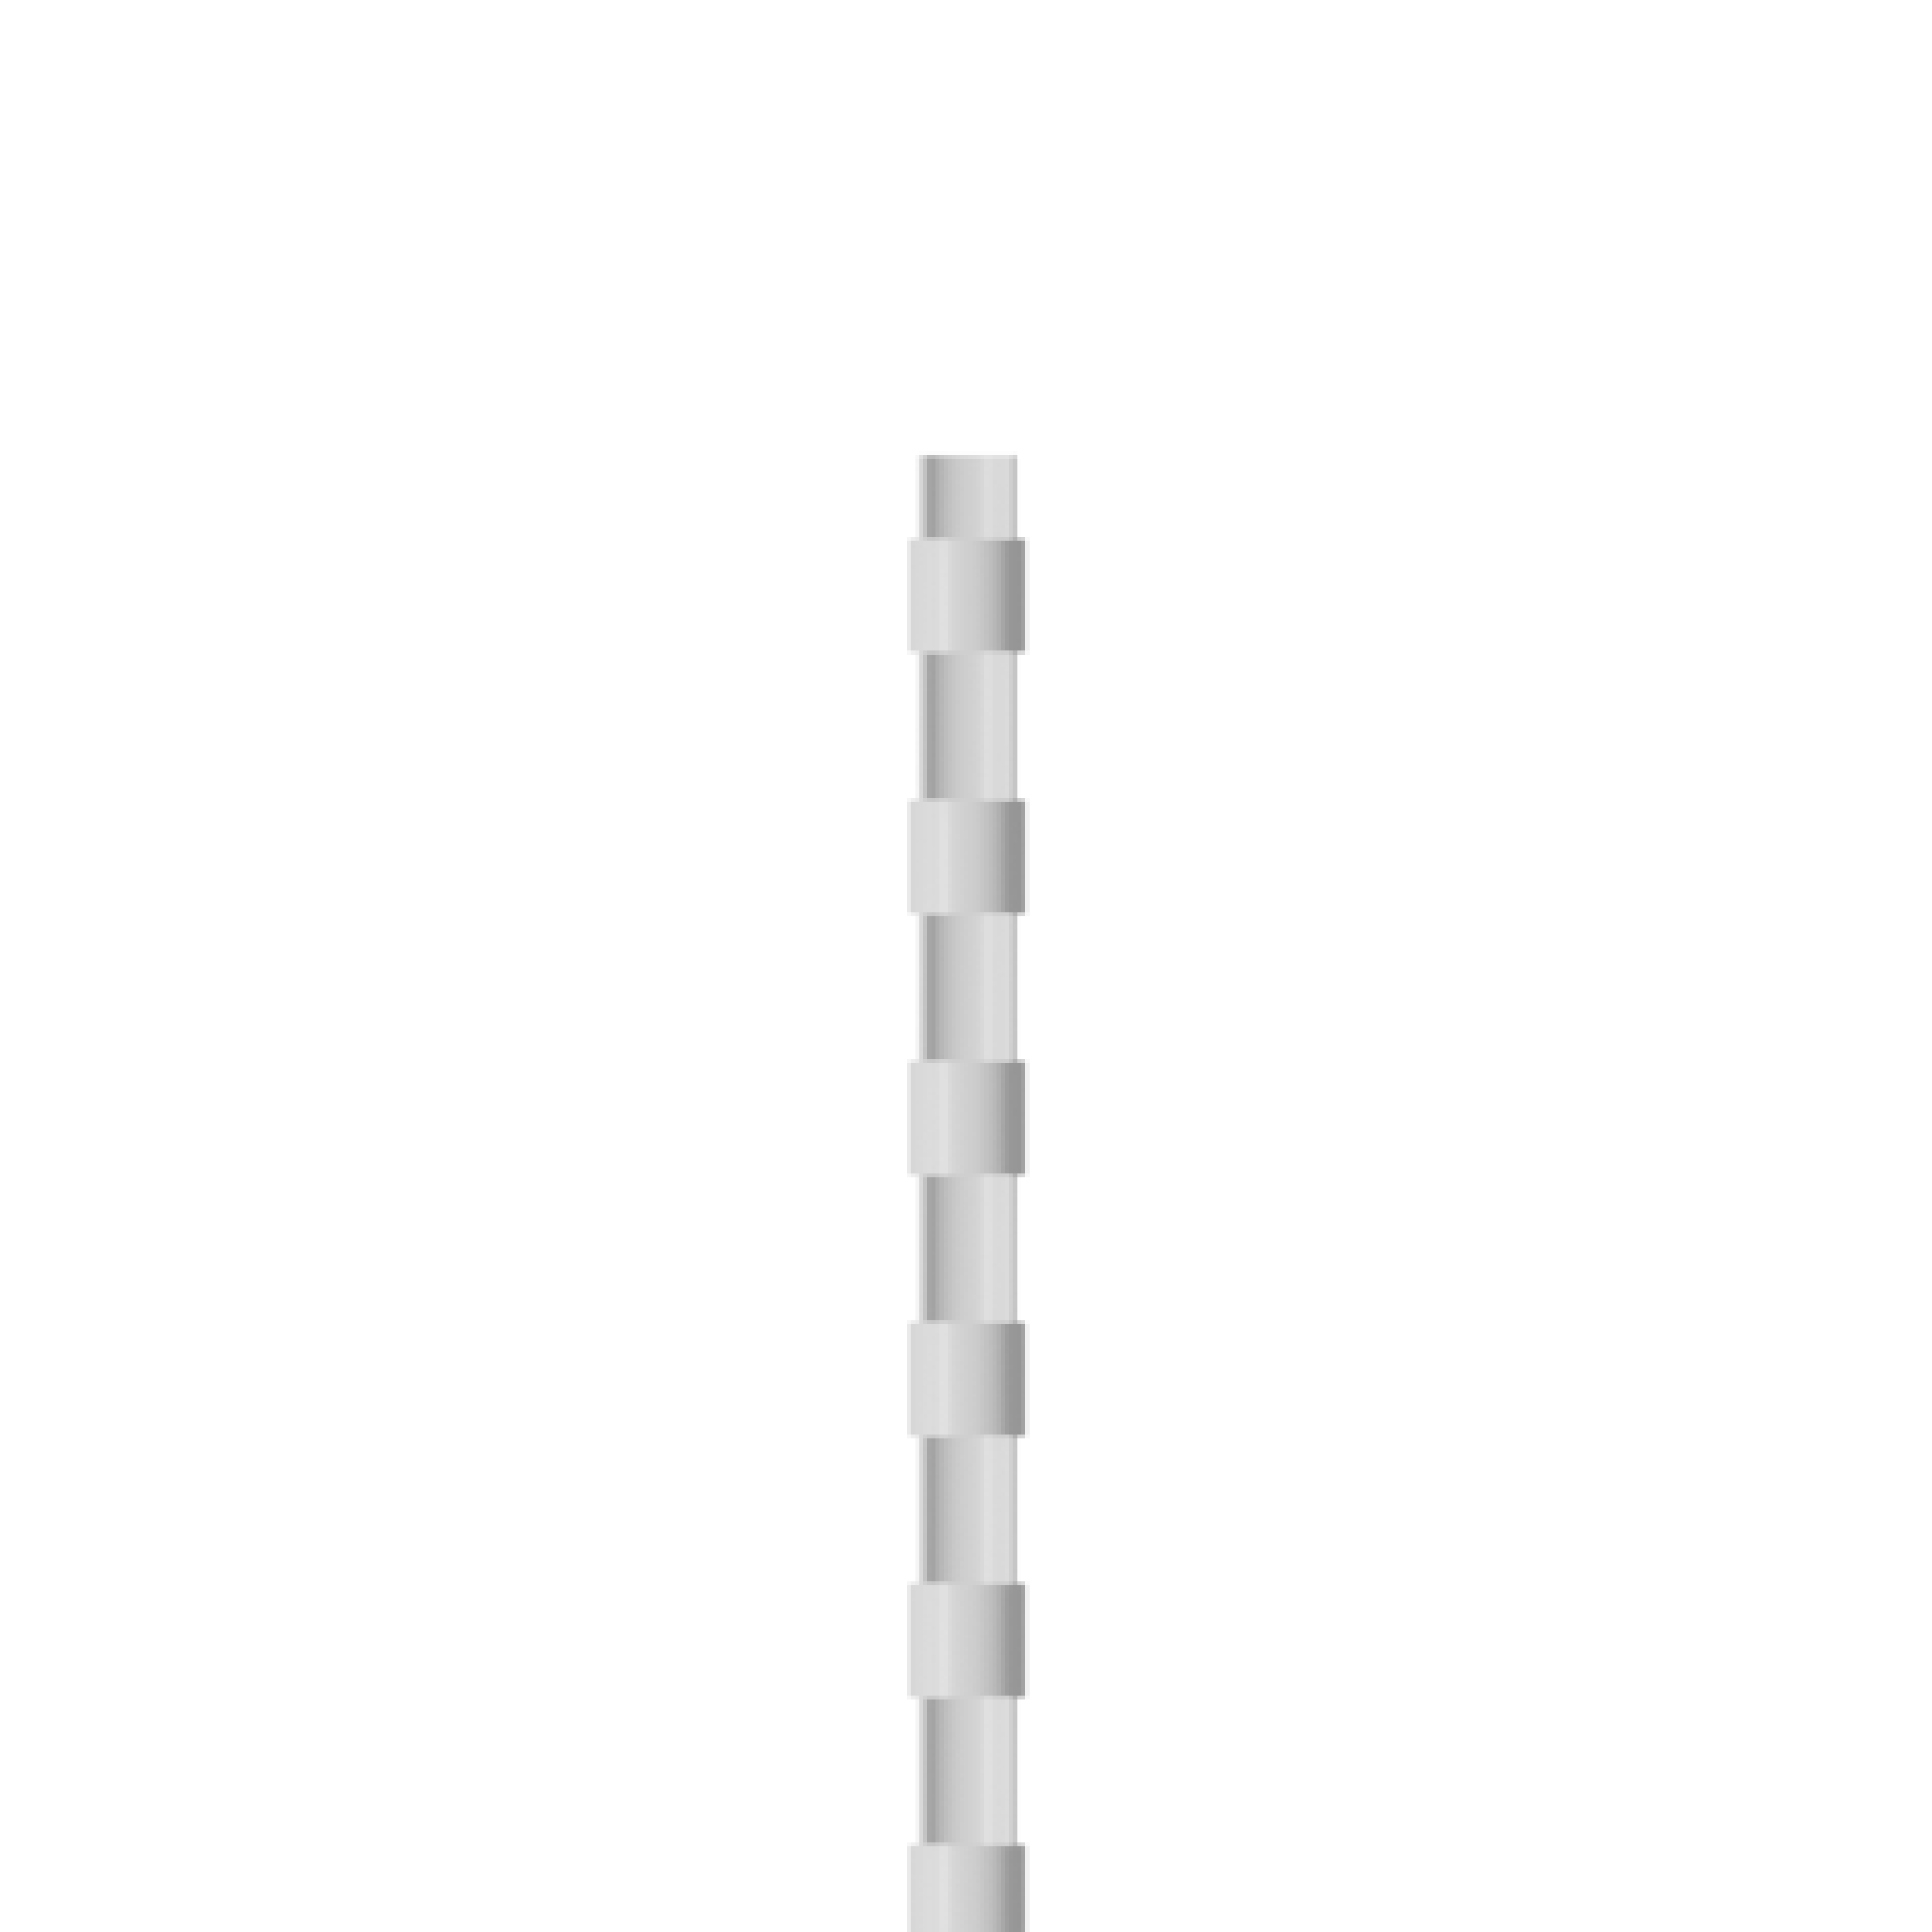 RAADO 6mm Plastic Spiral Binding Comb, White